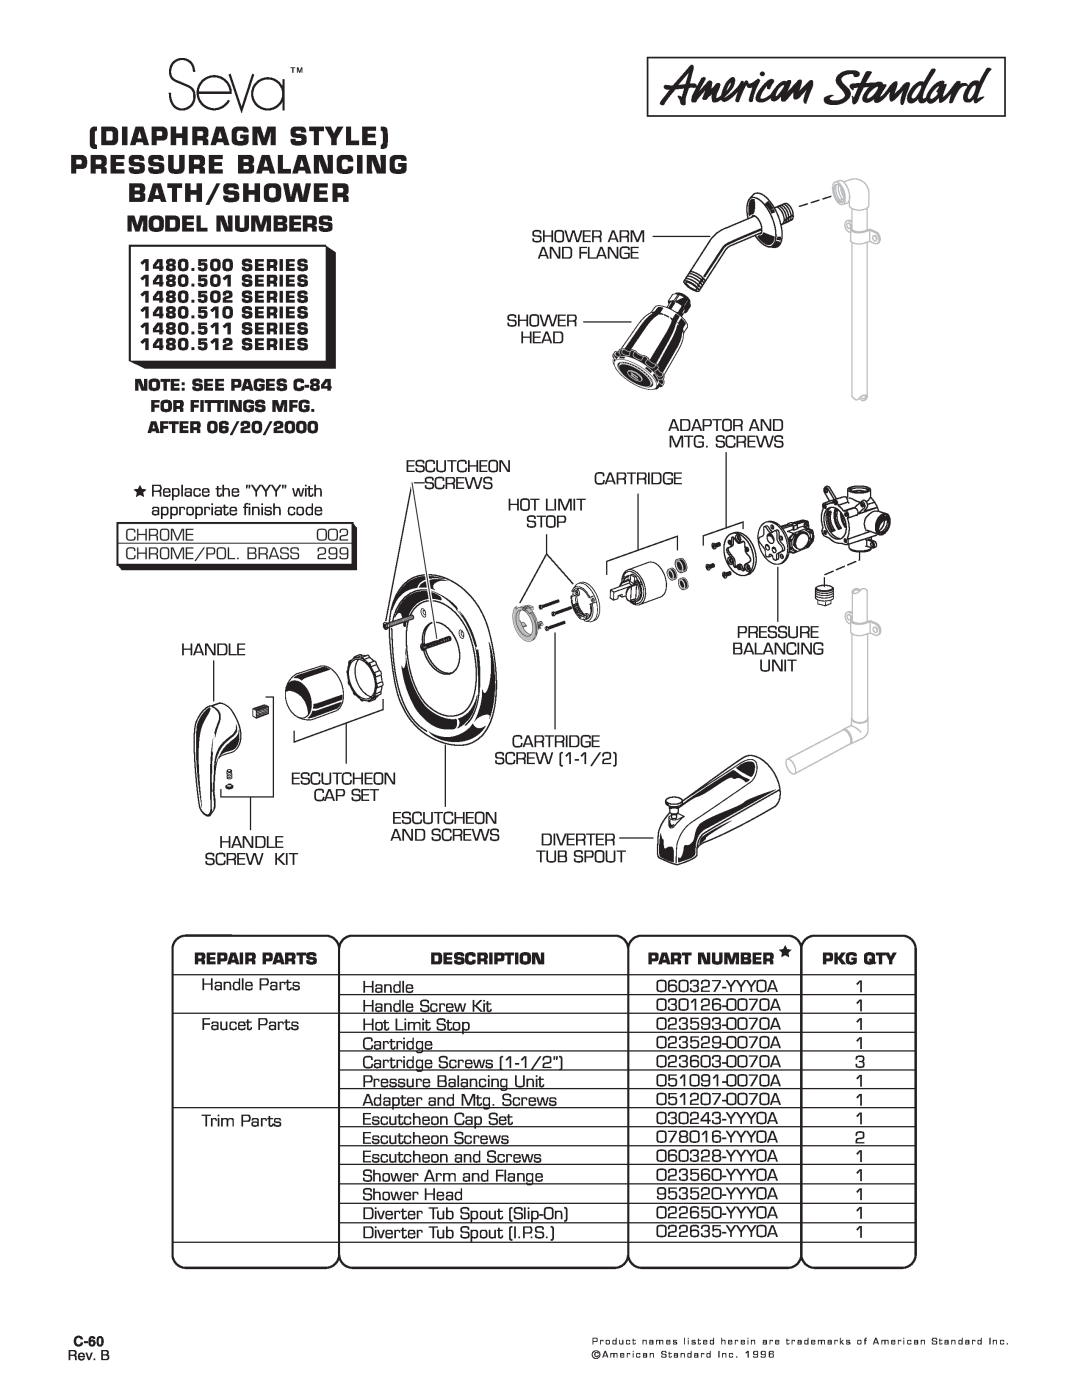 American Standard 1480.510 SERIES, 1480.512 SERIES manual Diaphragm Style Pressure Balancing Bath/Shower, Model Numbers 